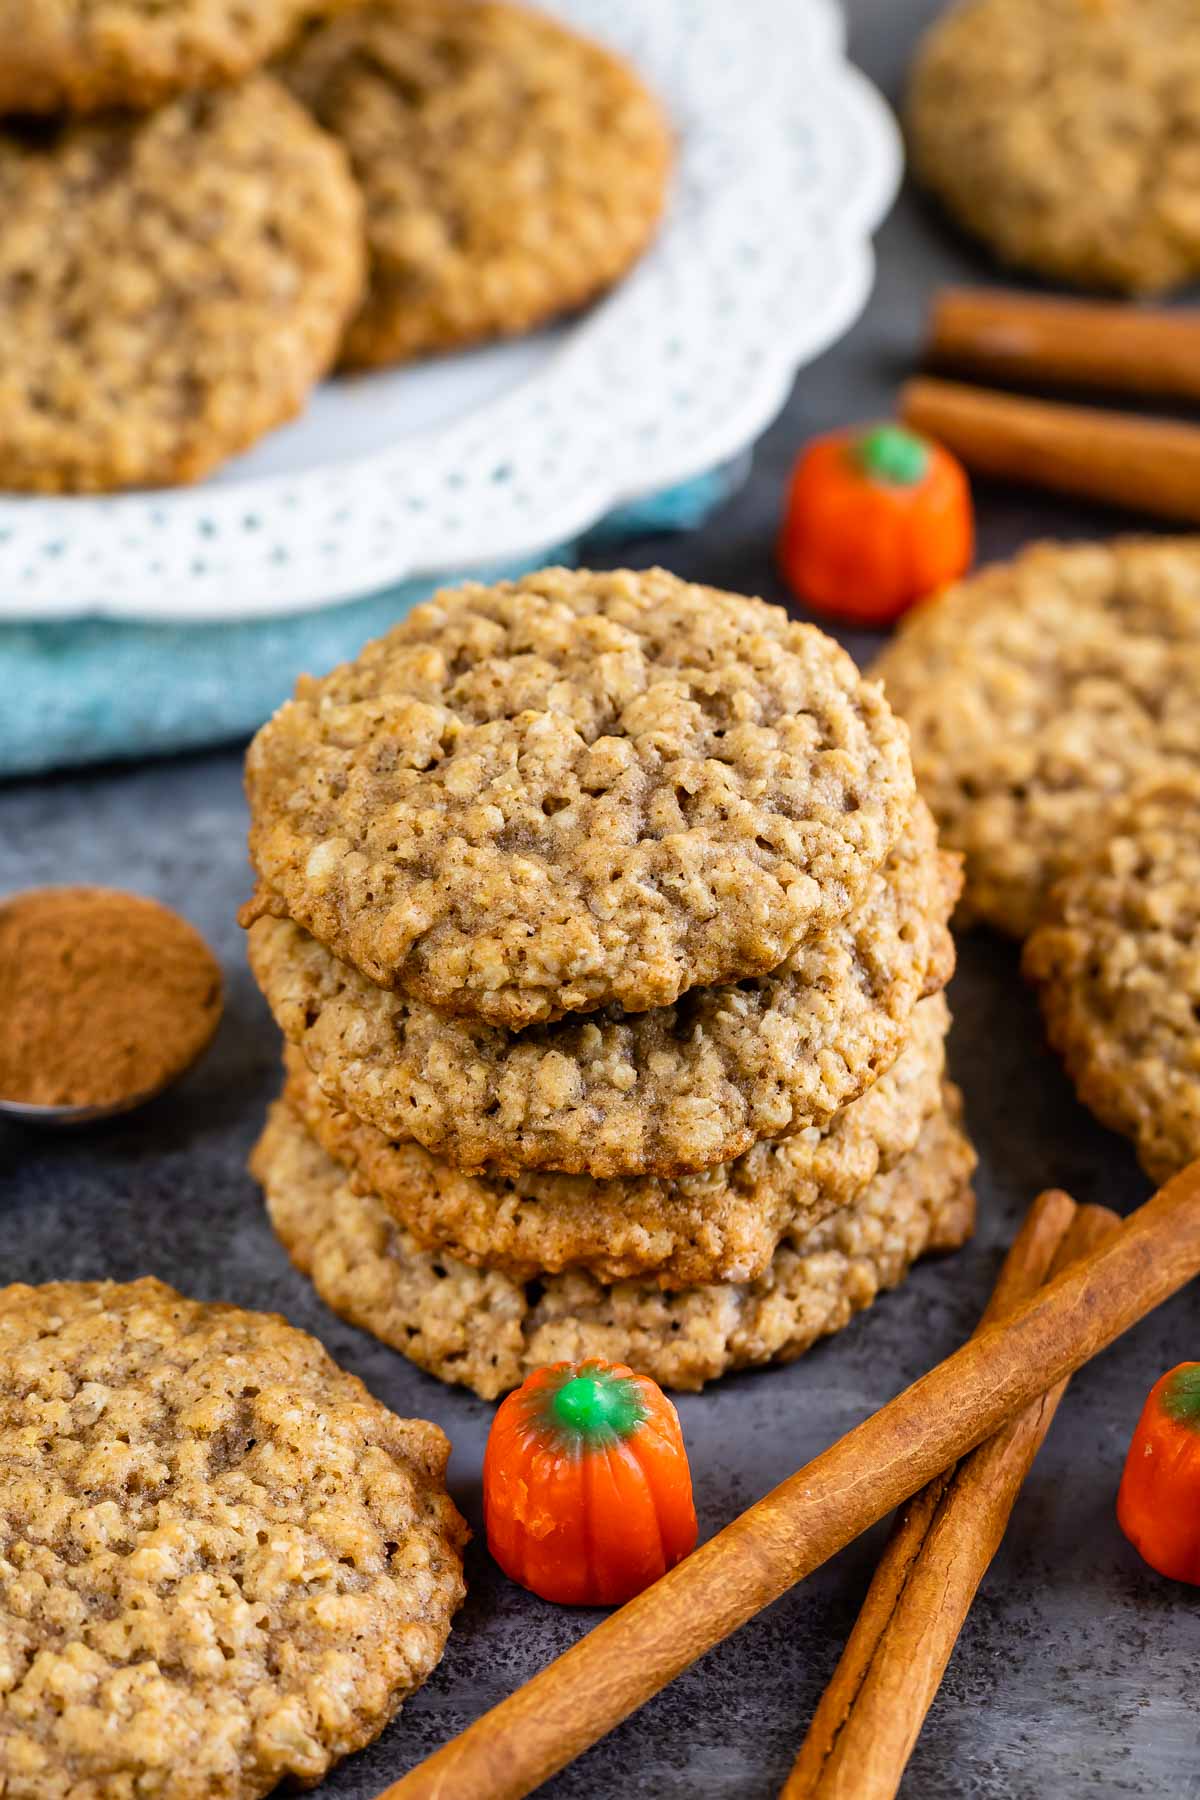 Pumpkin spice oatmeal cookies with cinnamon sticks and pumpkin candies